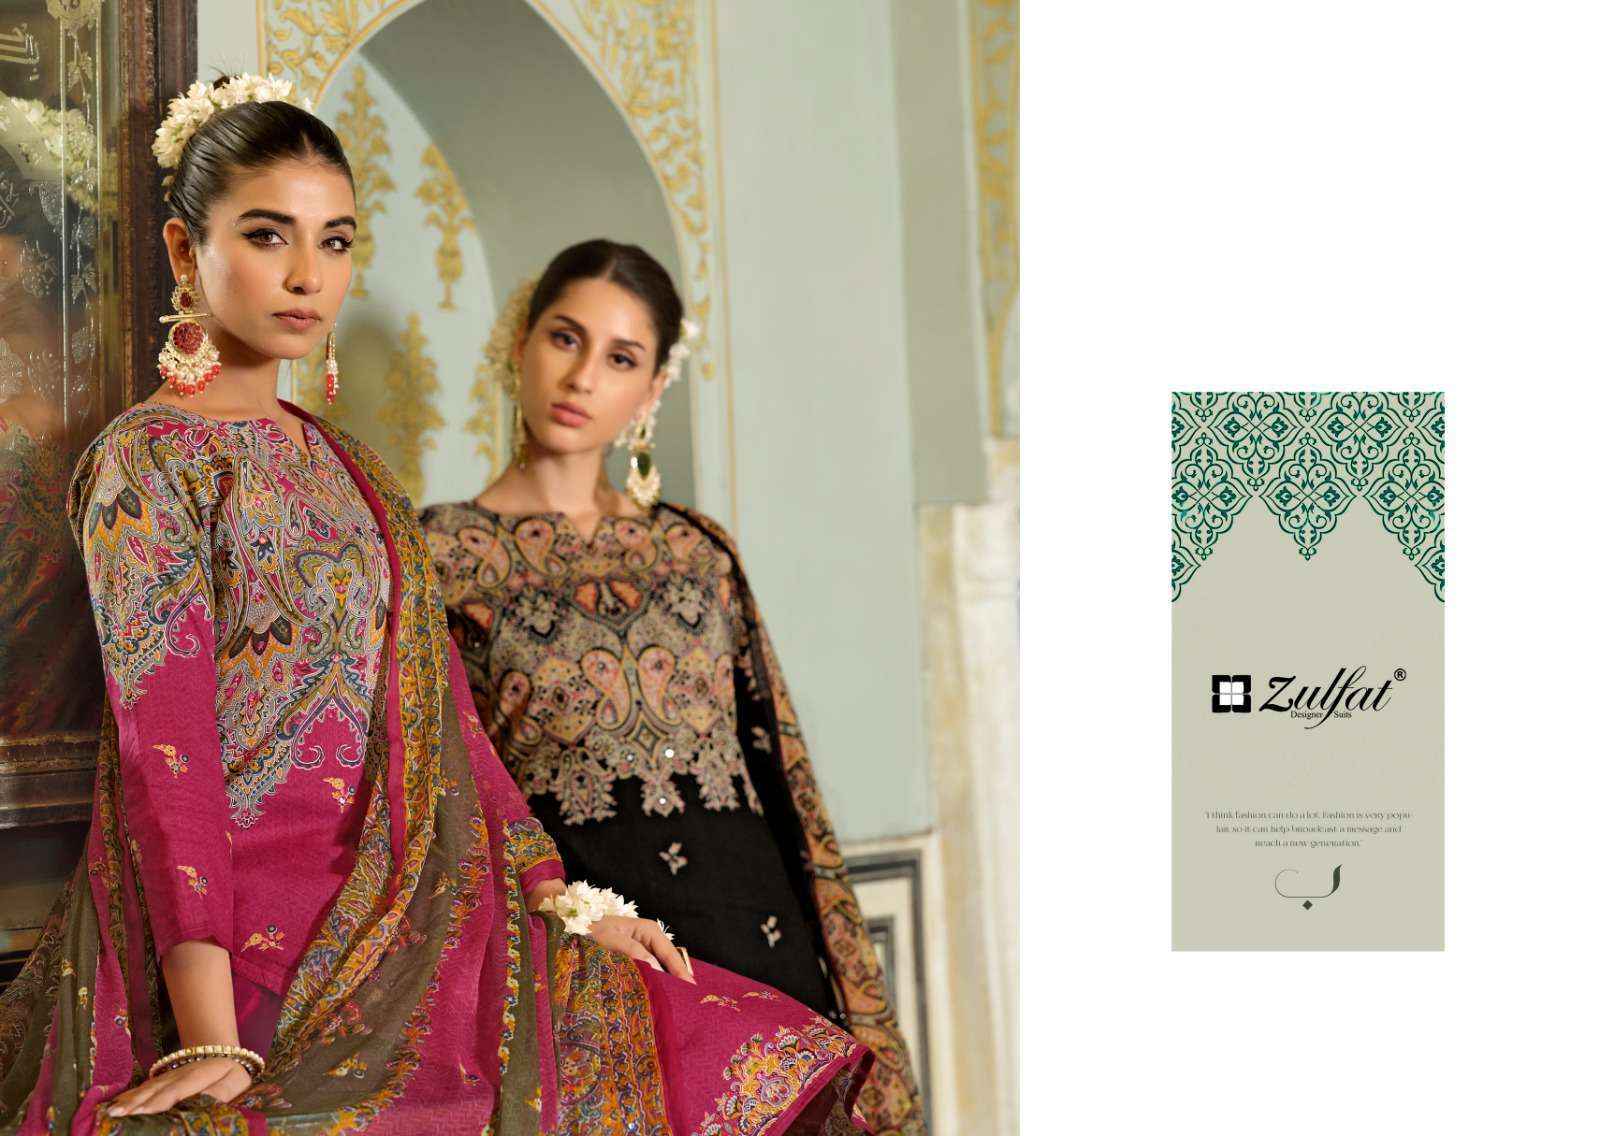 Zulfat Dilruba Pure Cotton Dress Material (8 Pc Catalog)